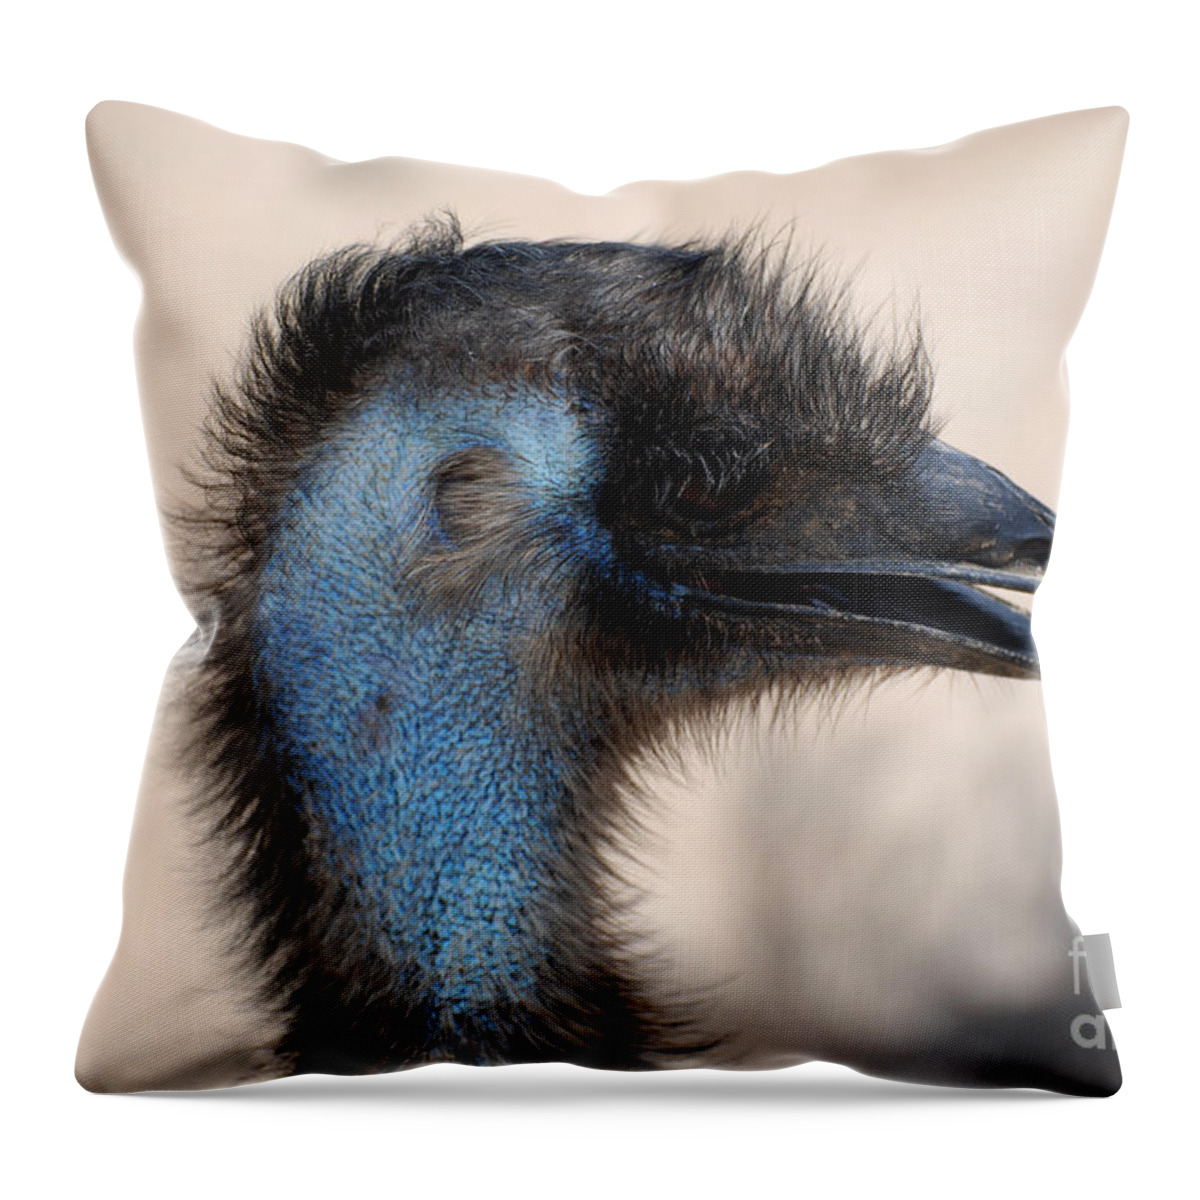 Emu Throw Pillow featuring the photograph Emu by DejaVu Designs